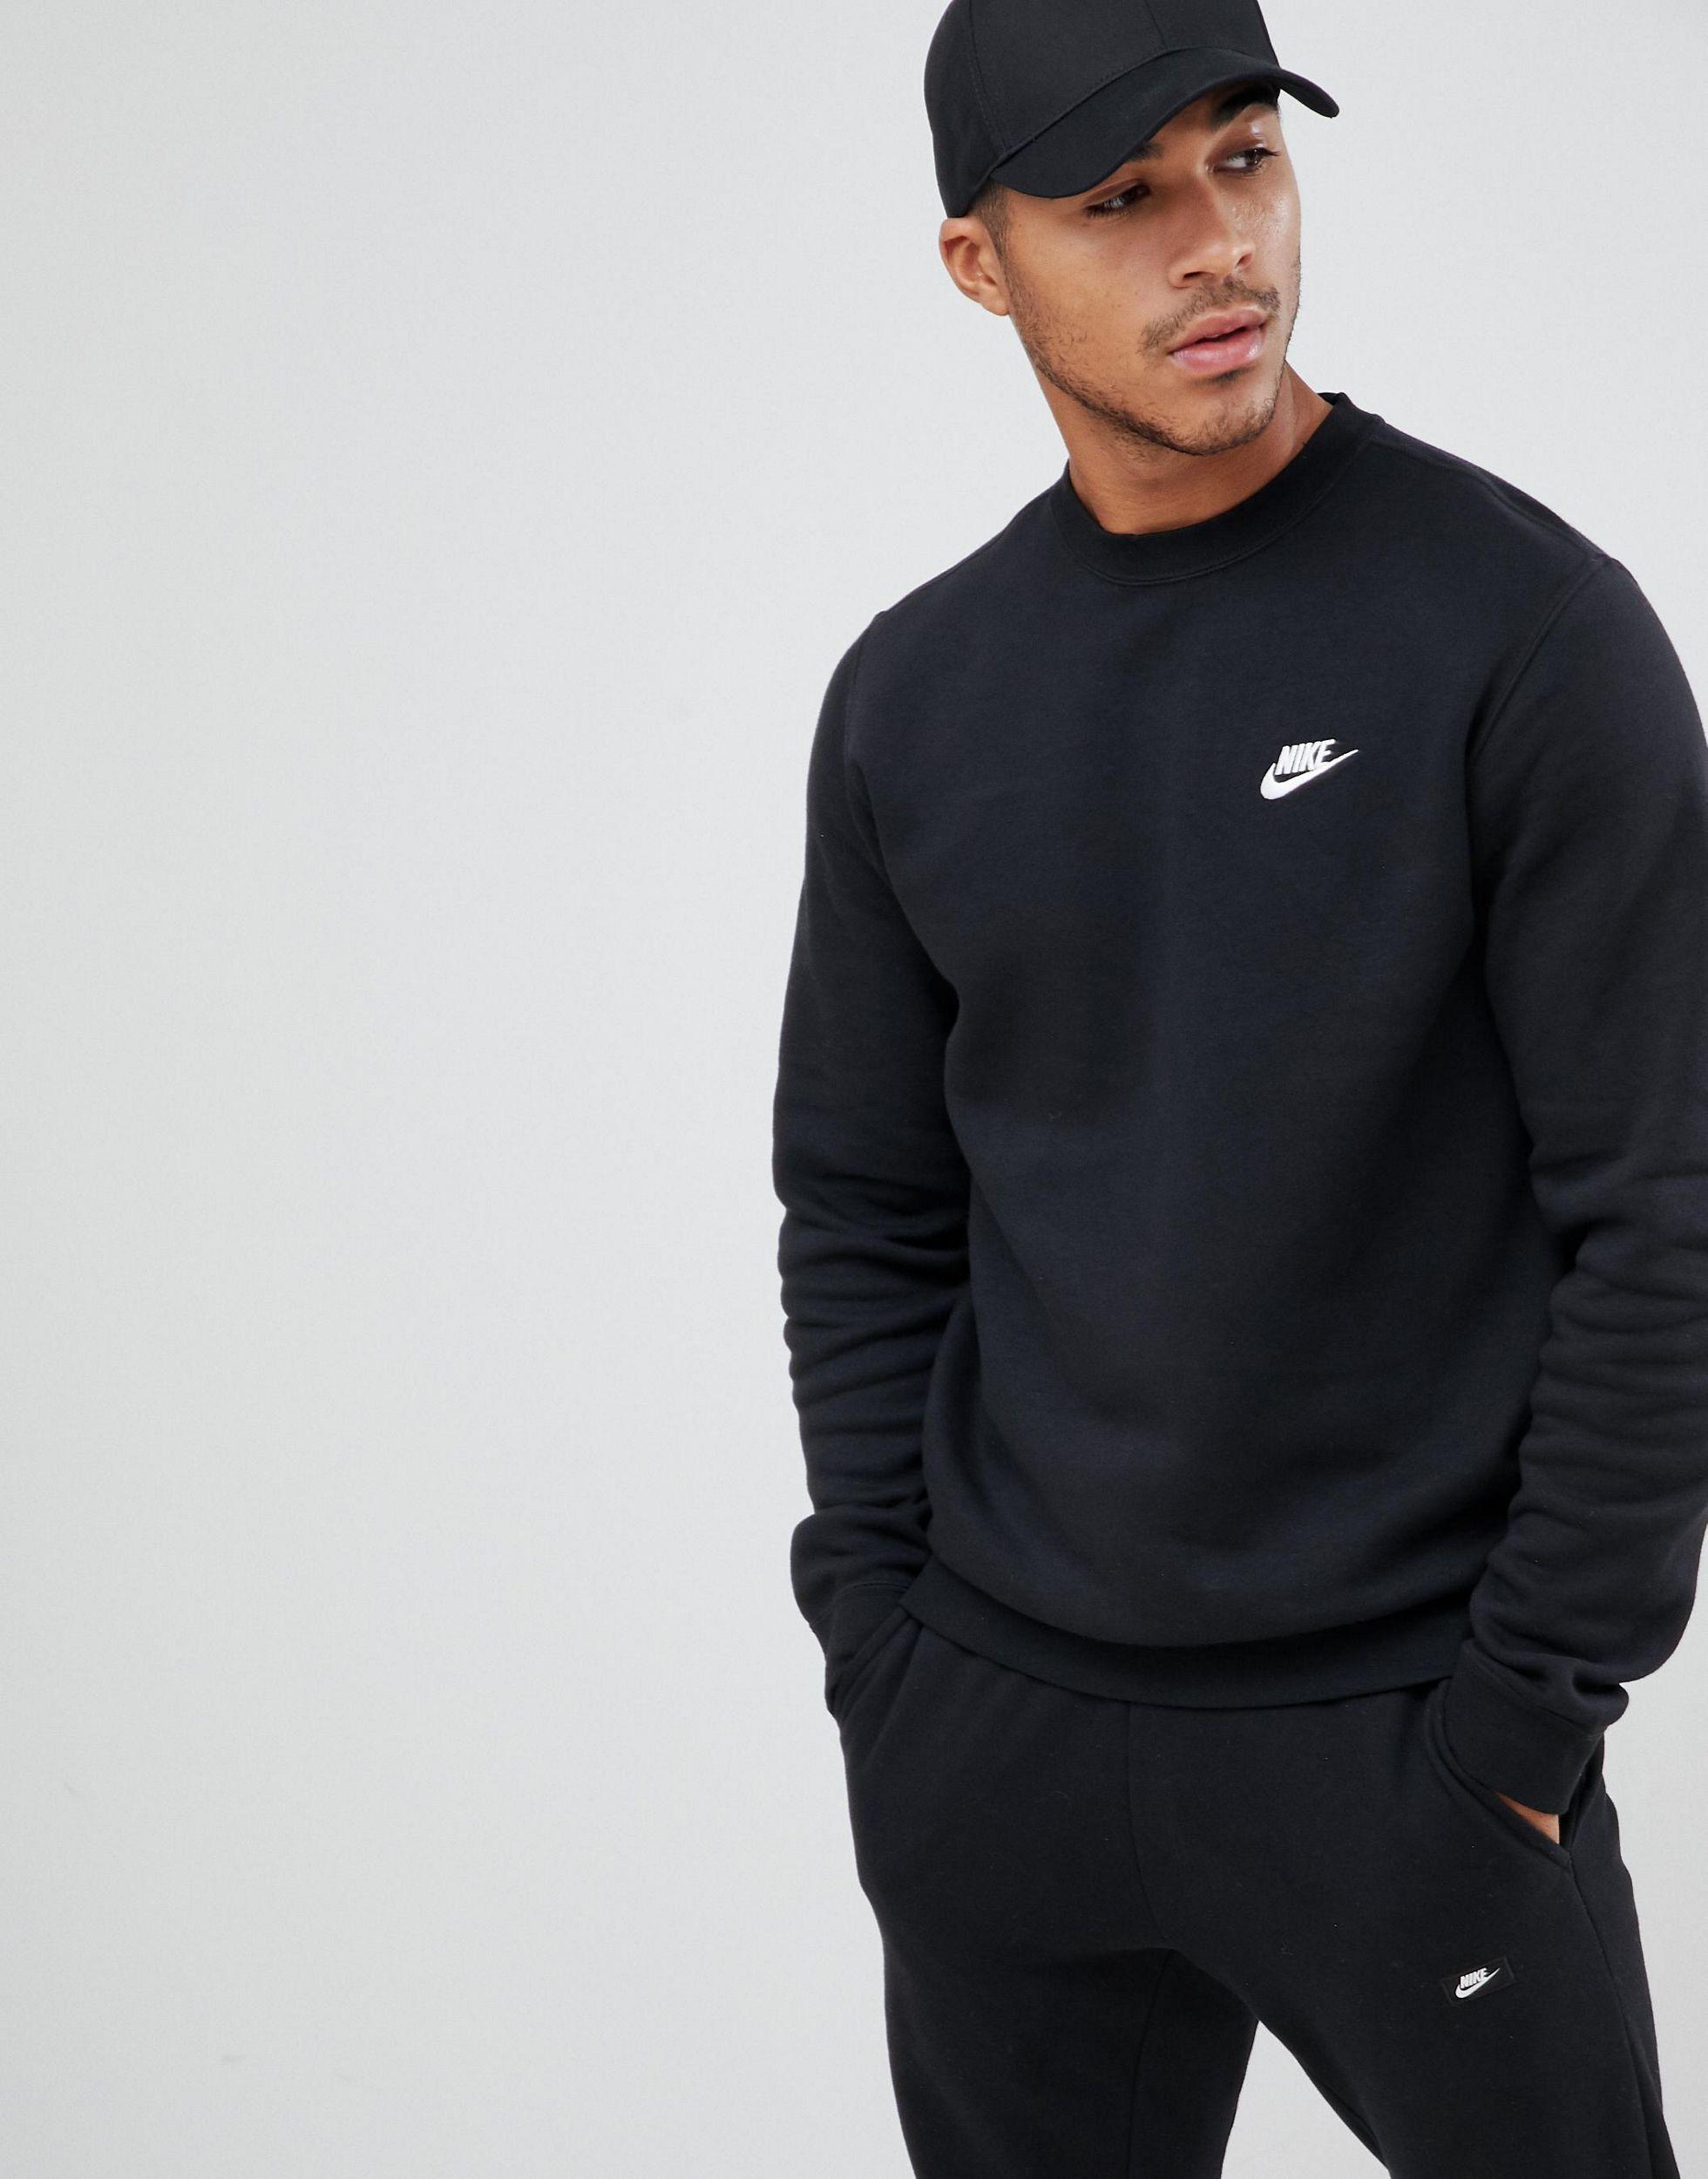 Nike Cotton Club Crew Sweatshirt in Black for Men - Save 41% - Lyst